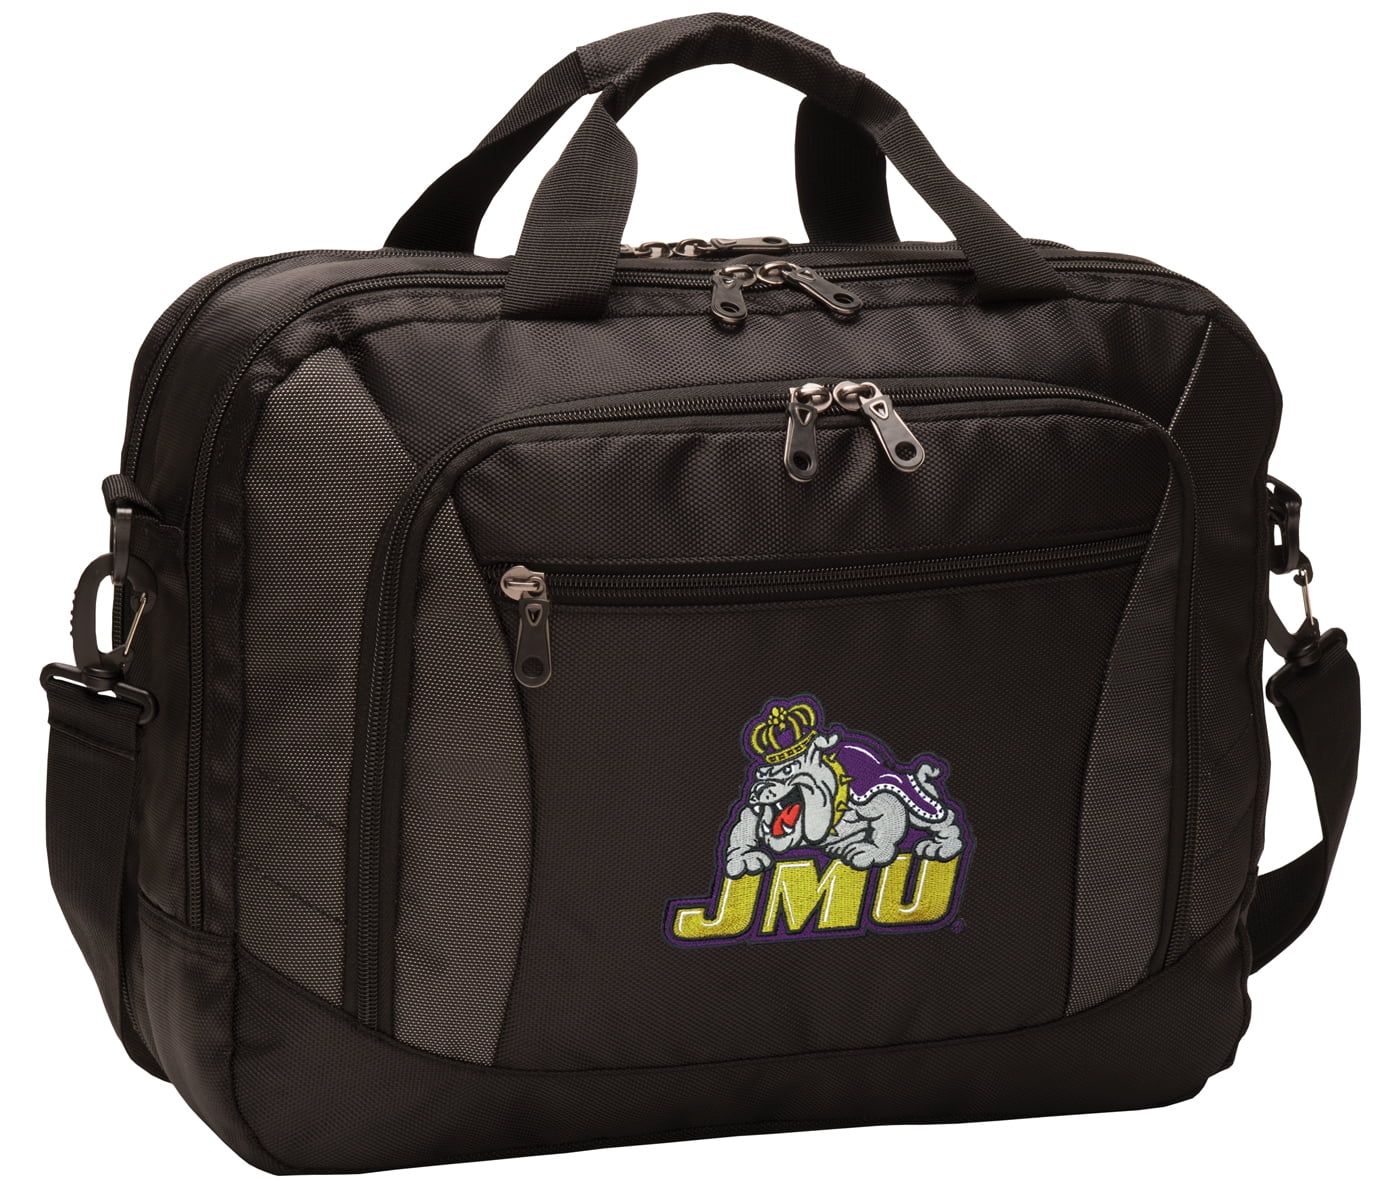 Broad Bay Small JMU Duffel Bag James Madison University Gym Bags or Suitcase 